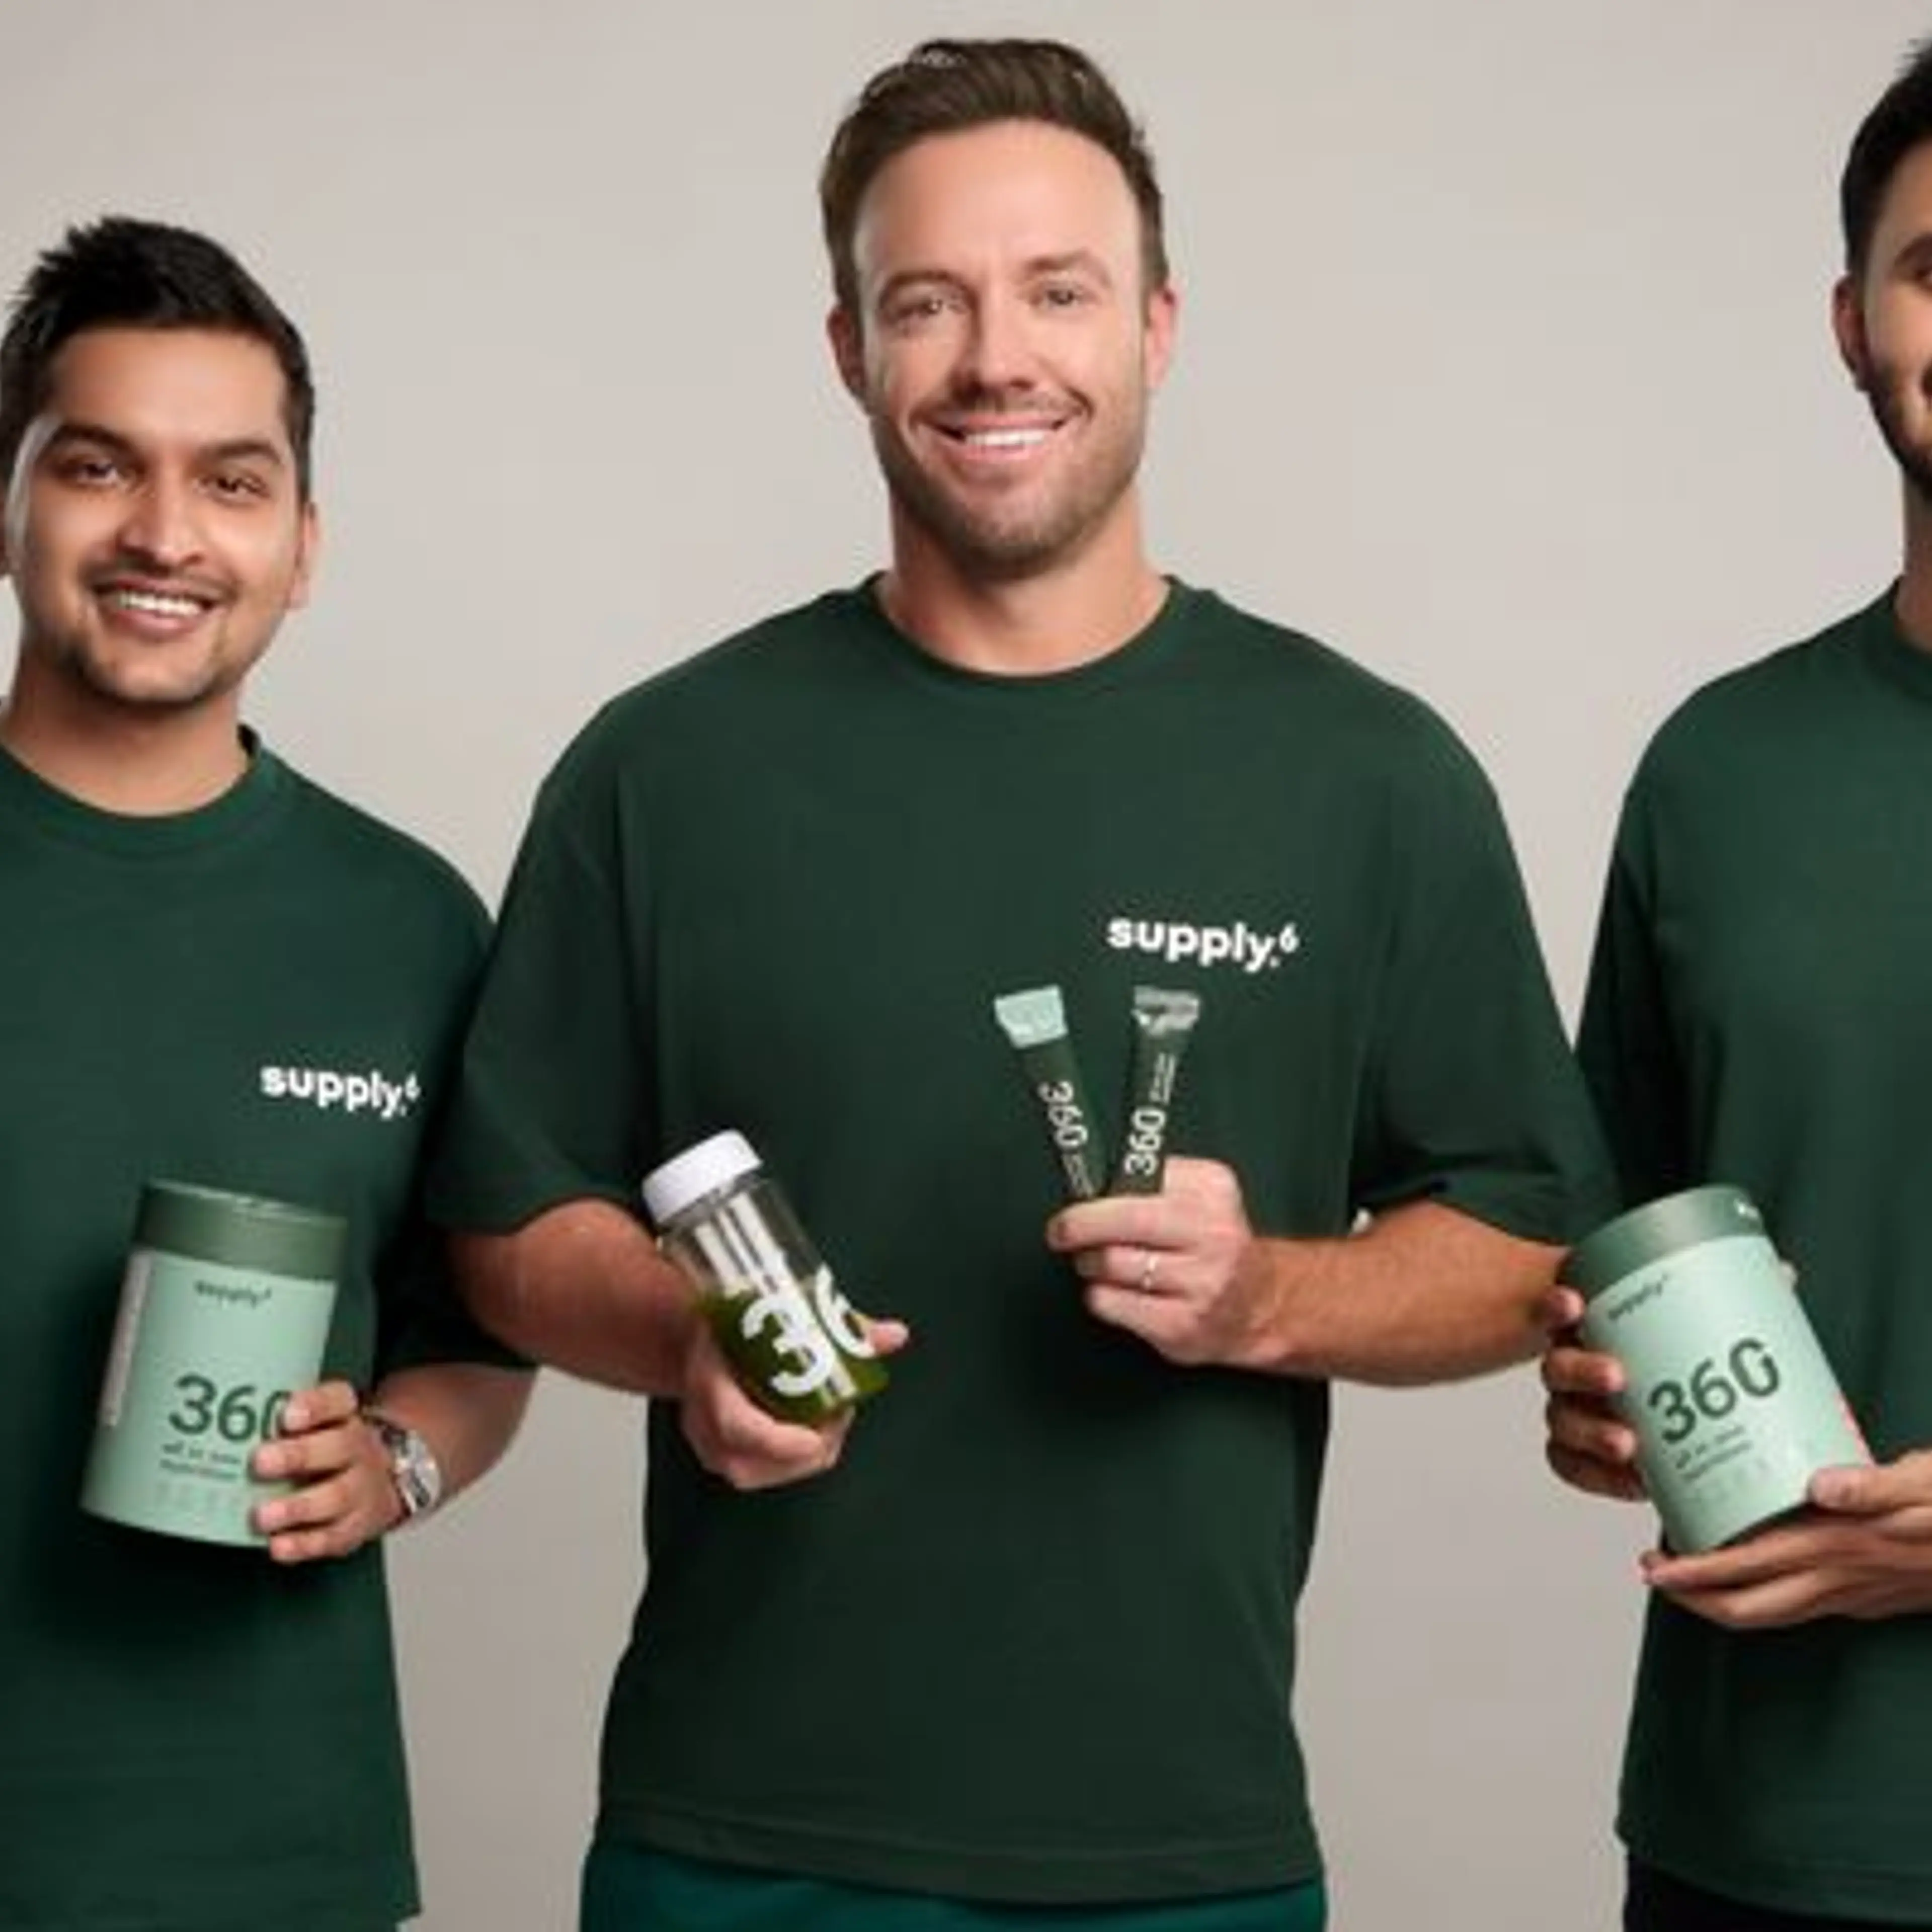 Cricketer AB De Villiers joins Supply6 as brand ambassador, investor